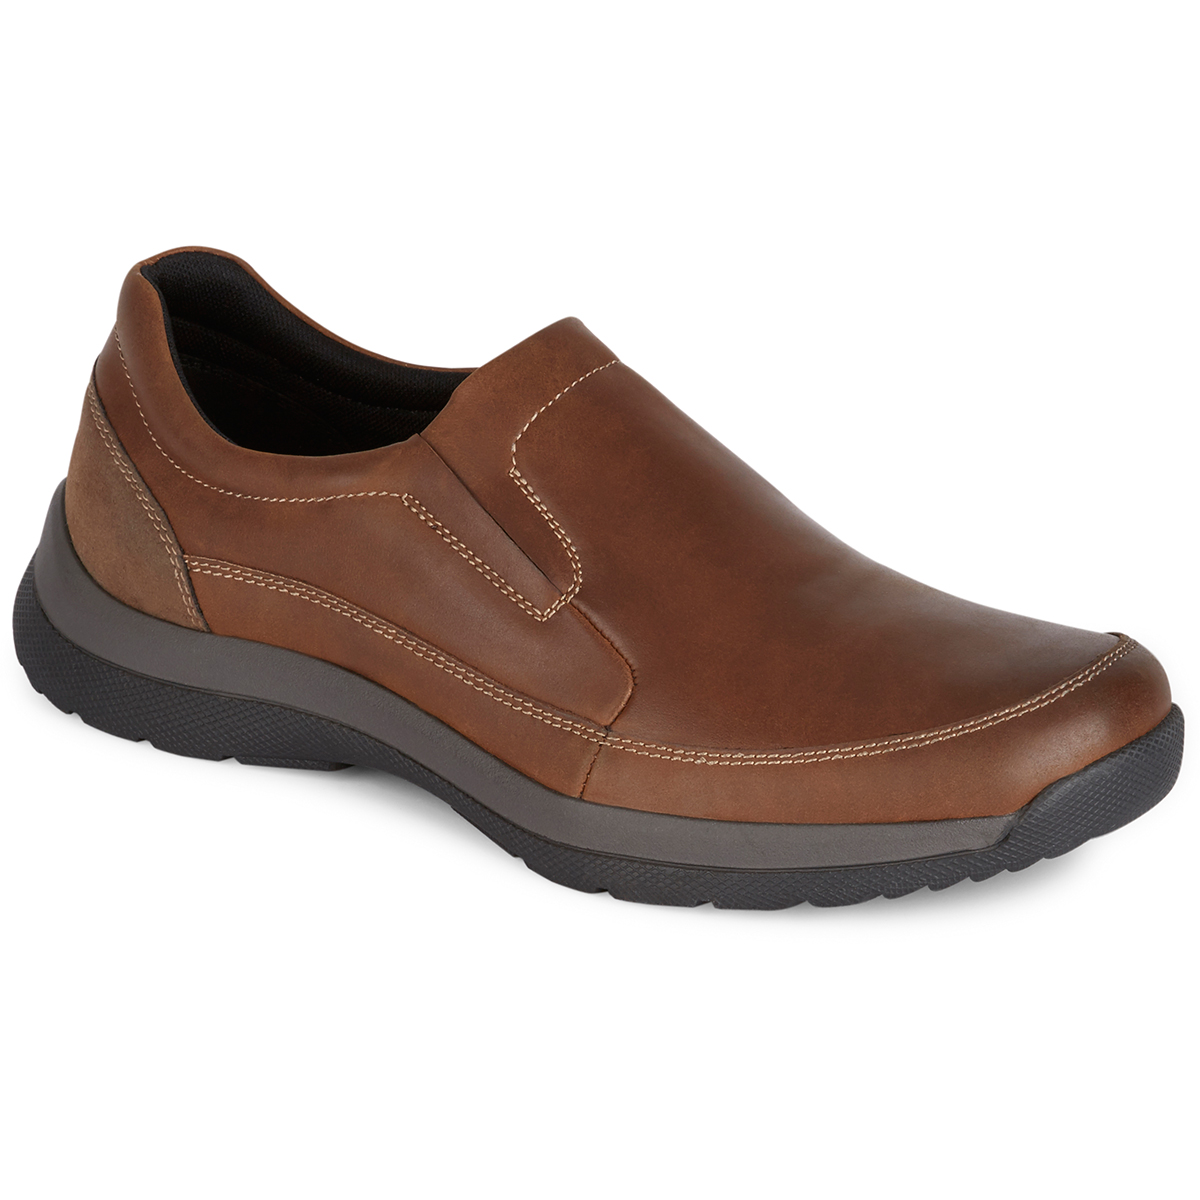 Dockers Men's Rogan Moc Toe Casual Slip-On Shoes - Brown, 10